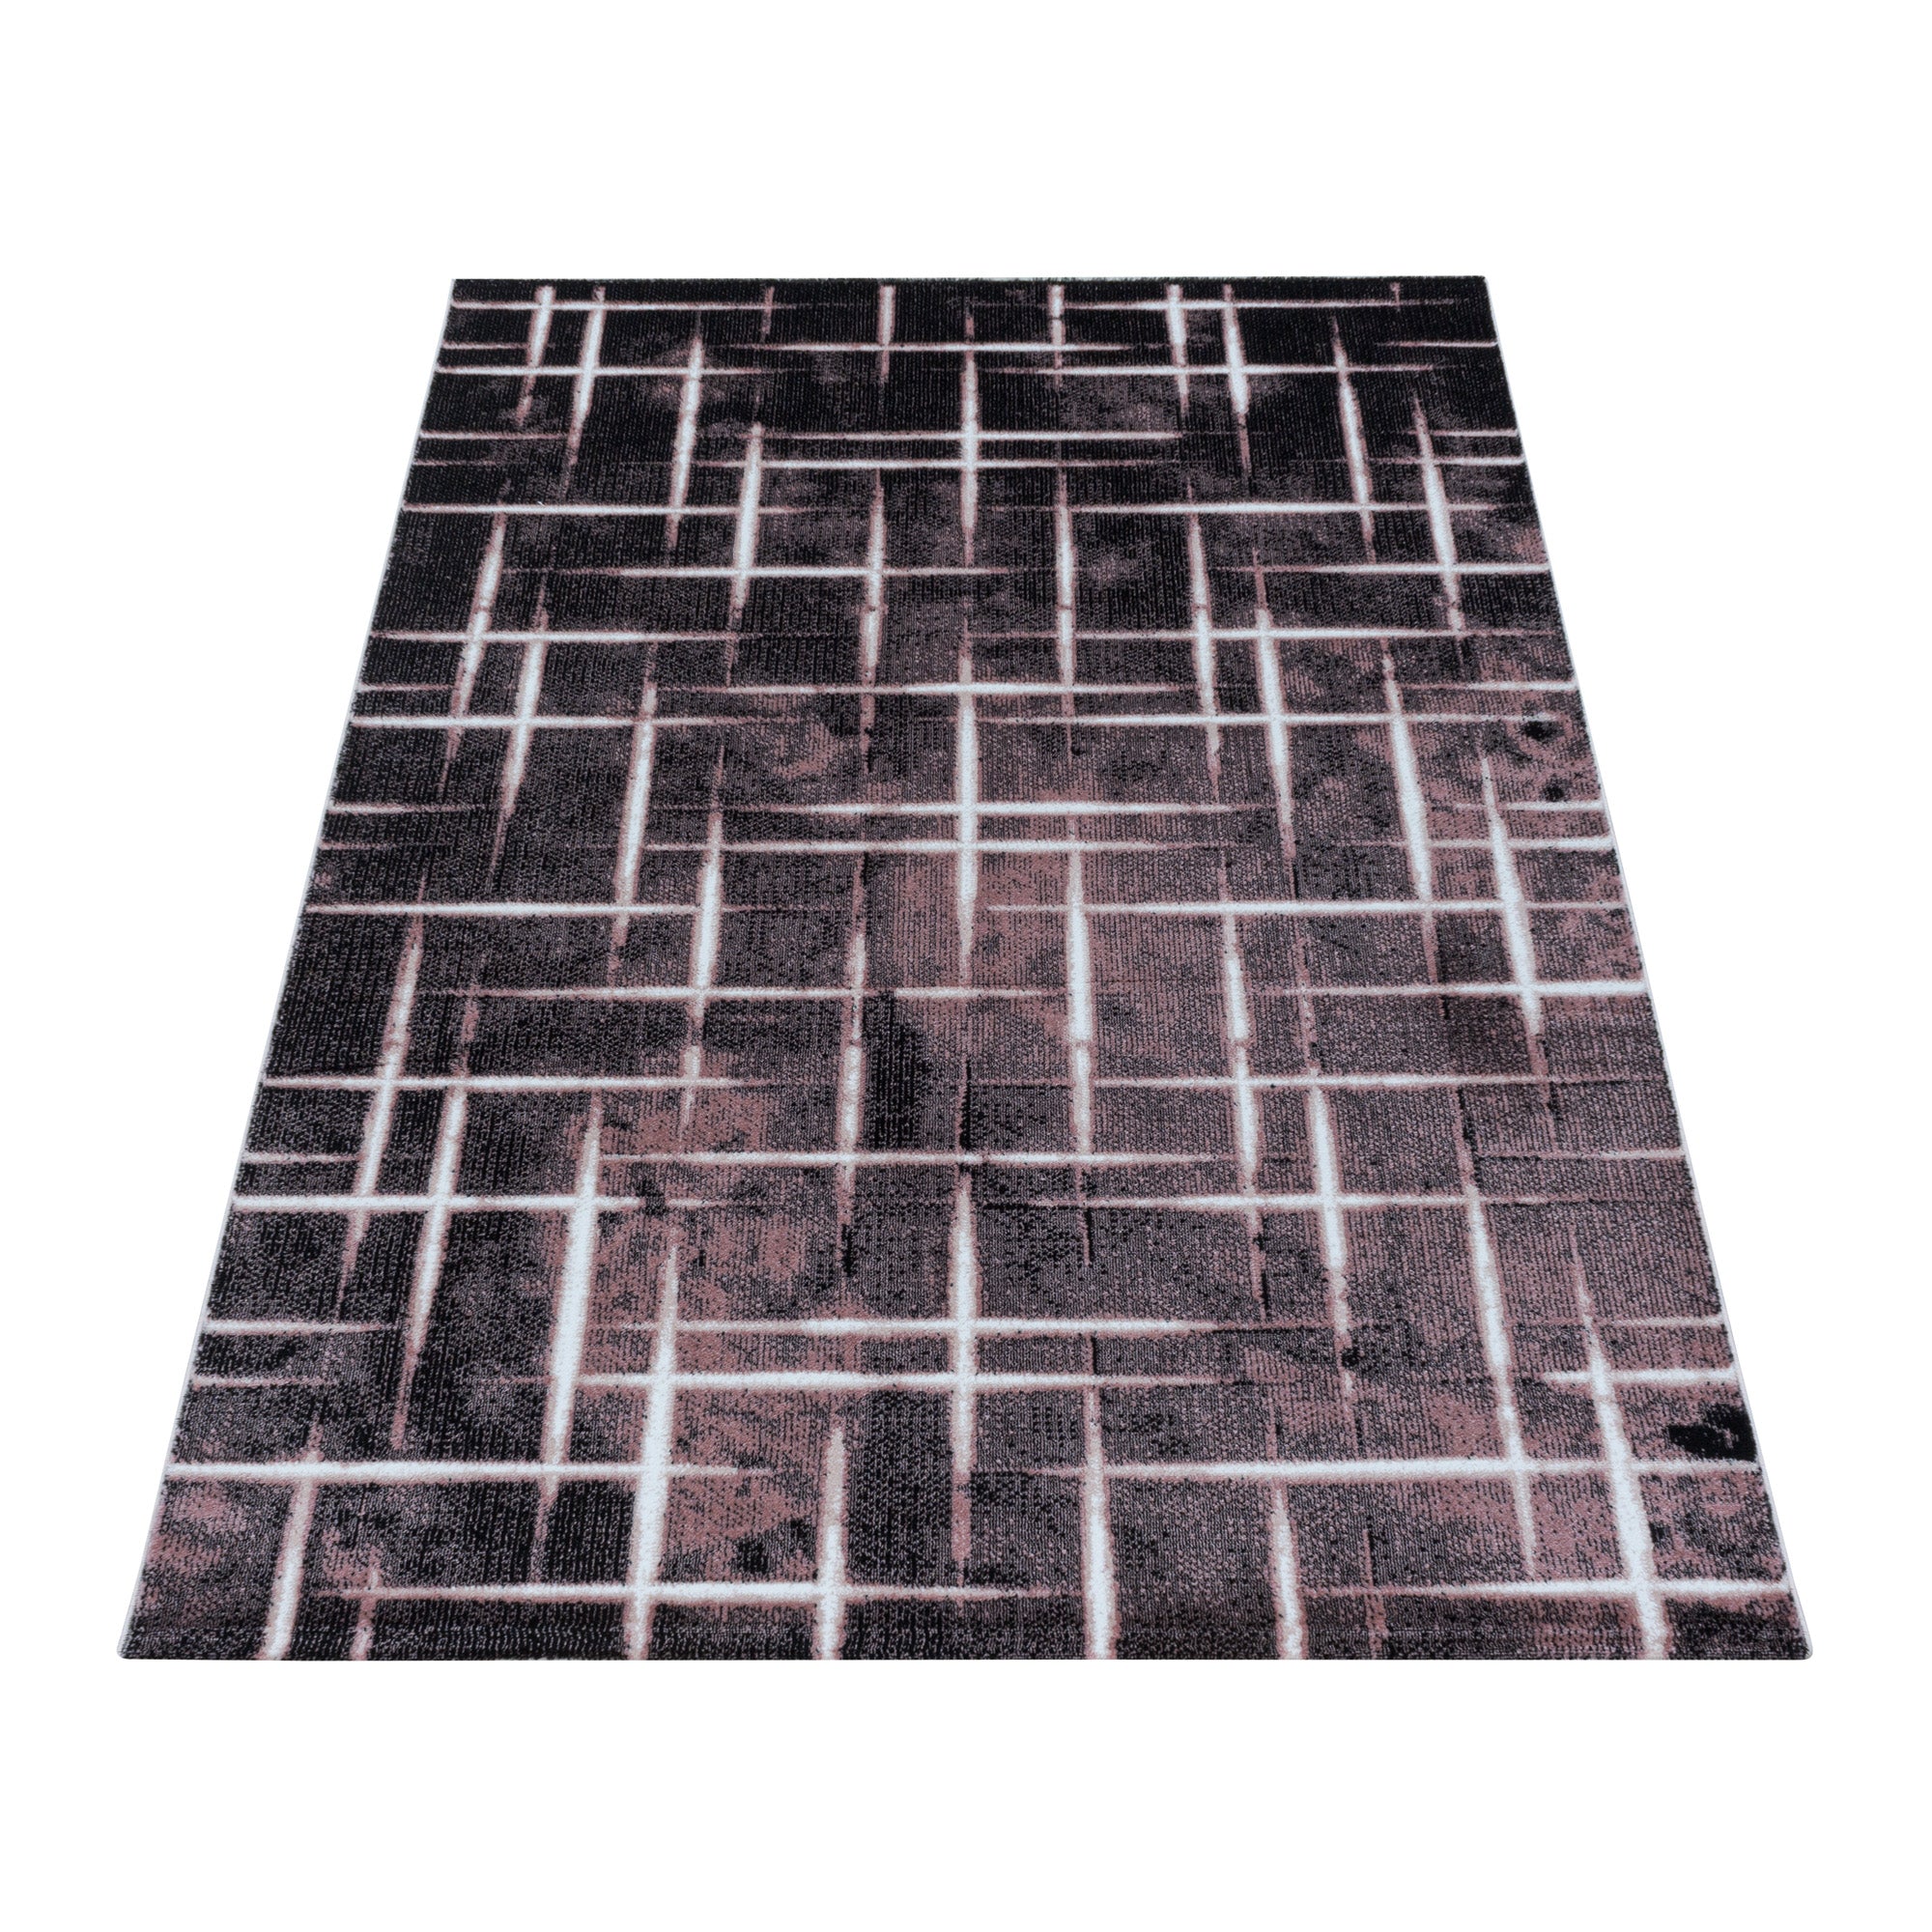 Kurzflor Design Teppich Wohnzimmerteppich Gitter Muster Soft Flor Pink